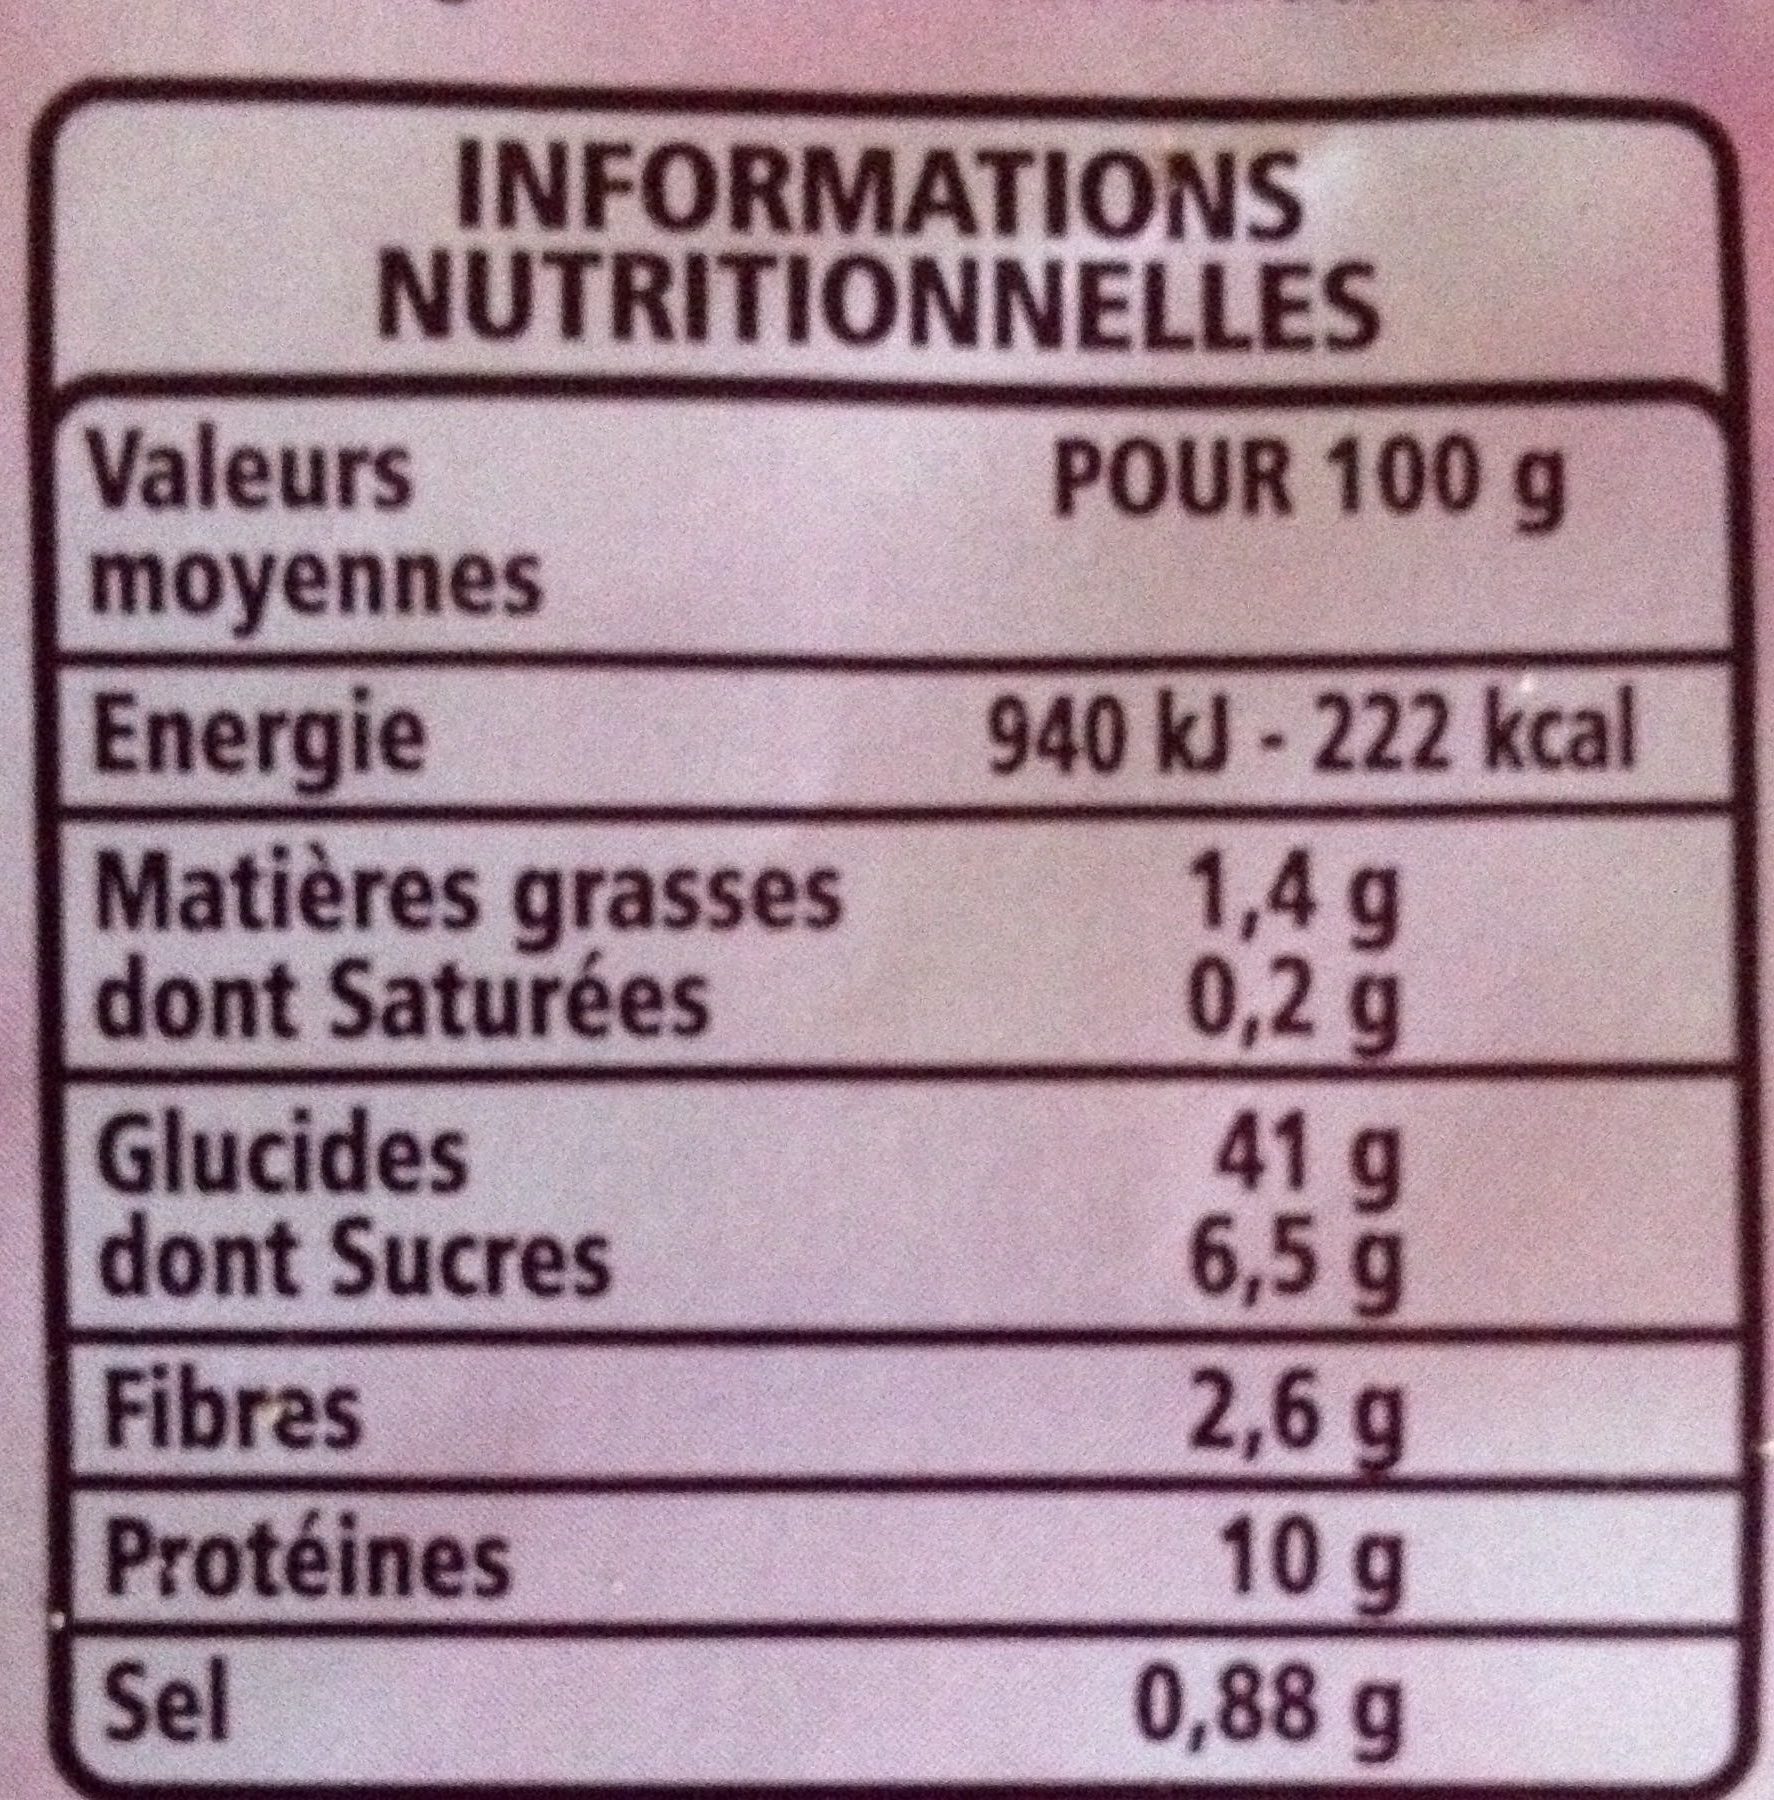 4 Muffins blancs - CASINO SAVEURS D'AILLEURS - Royaume-Uni - Nutrition facts - fr